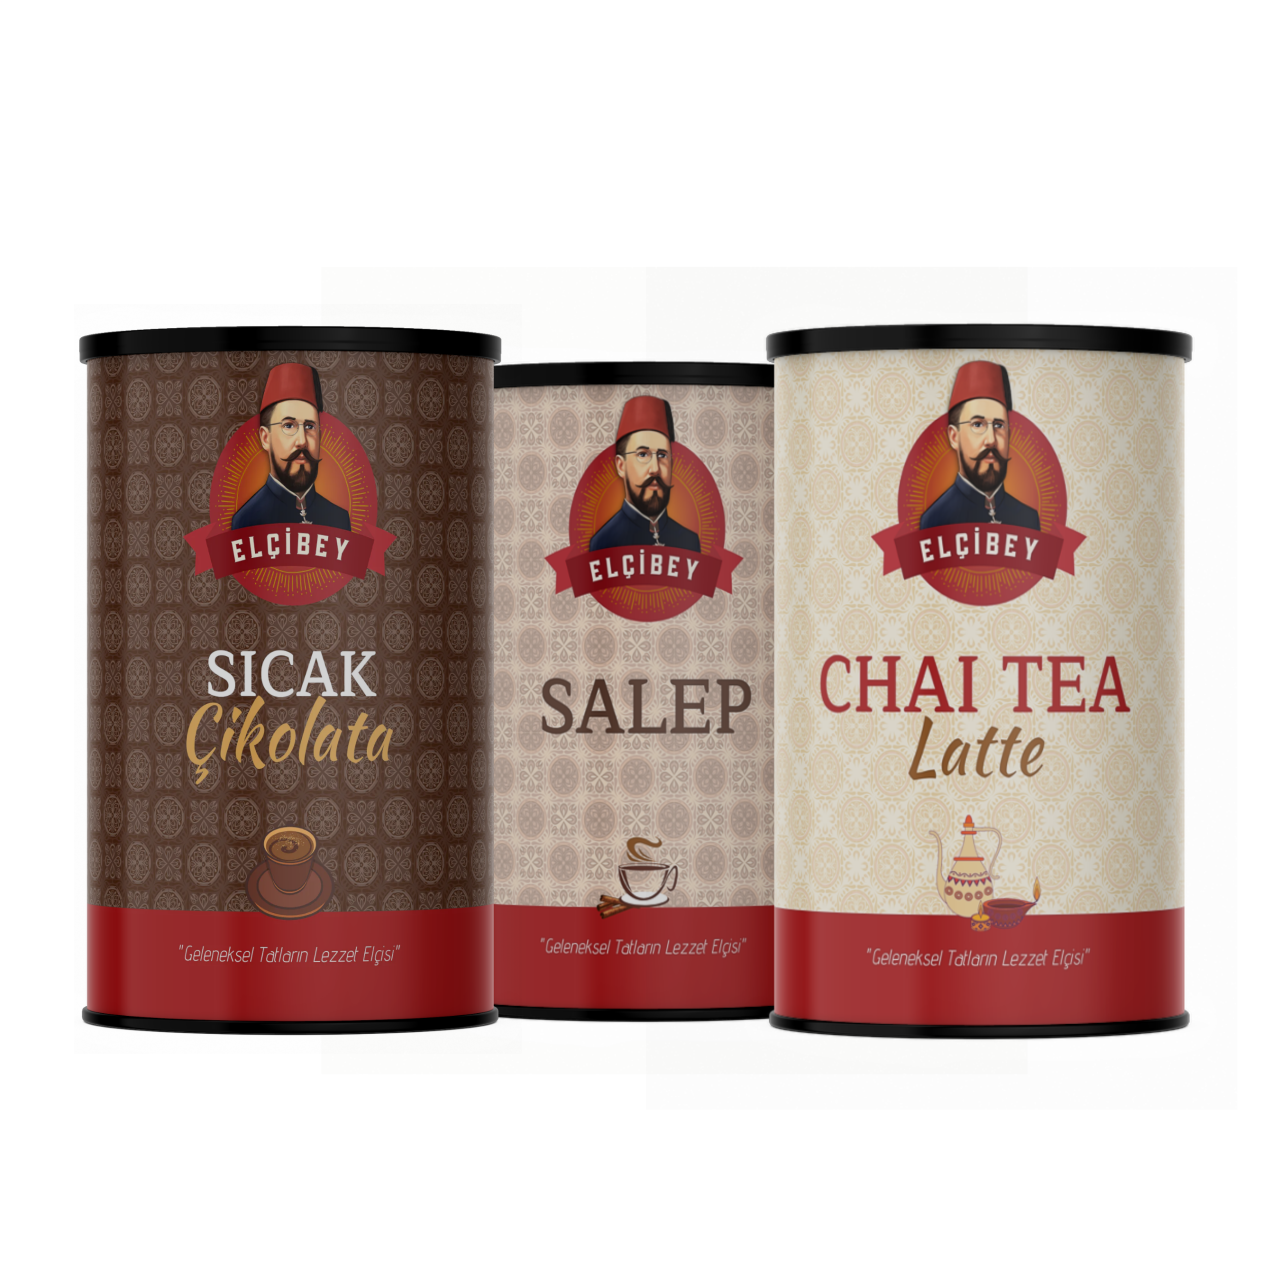 Salep + Sıcak Çikolata + Chai Tea Latte  3 x 400 G